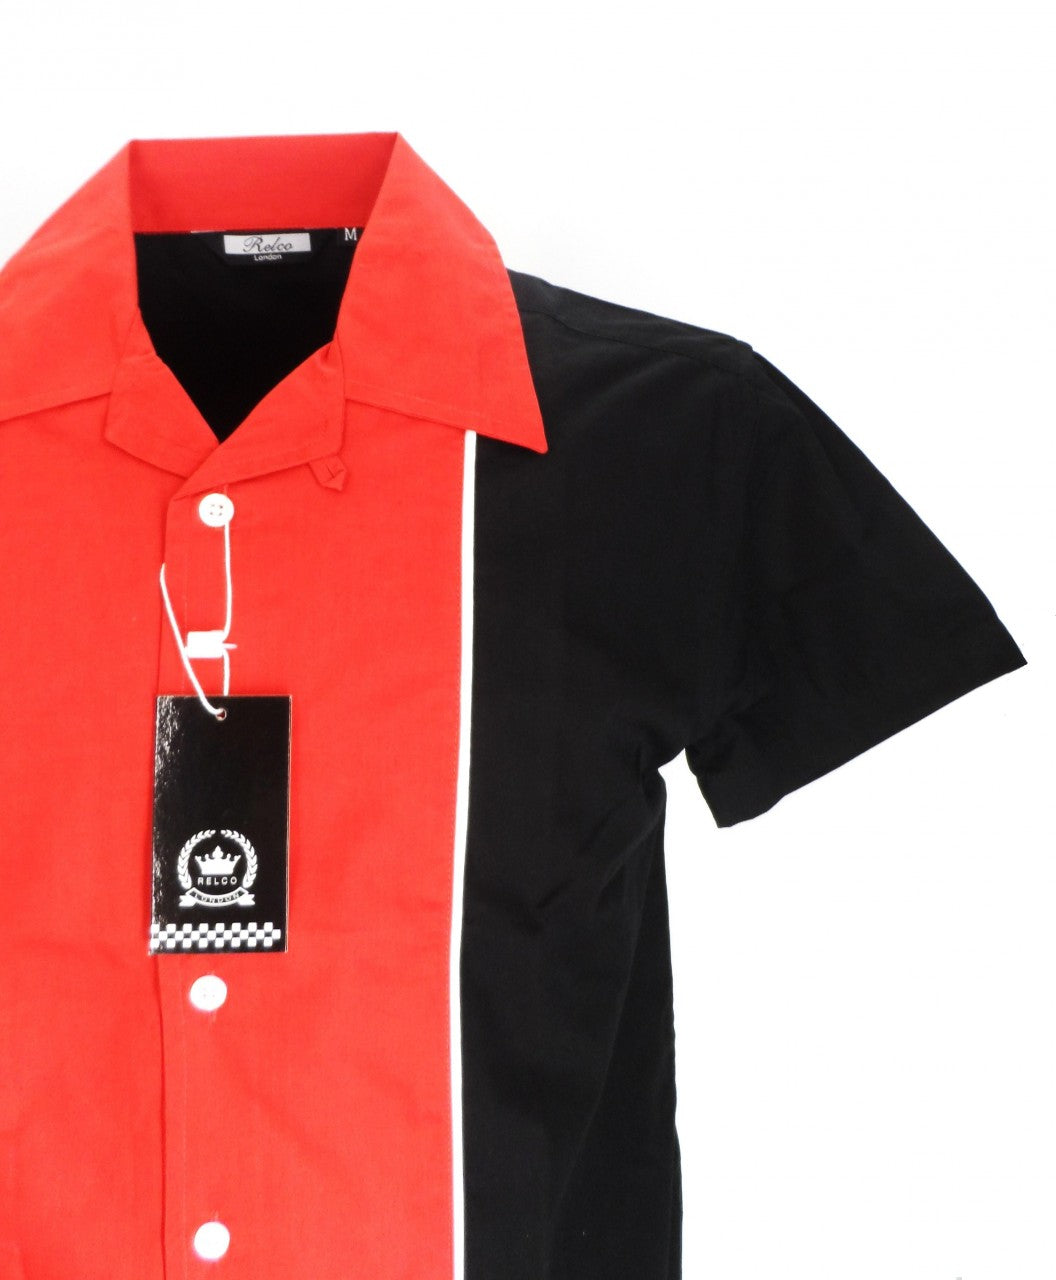 Rockabilly Bowling Camisas negras/rojas Camisa vintage/retro